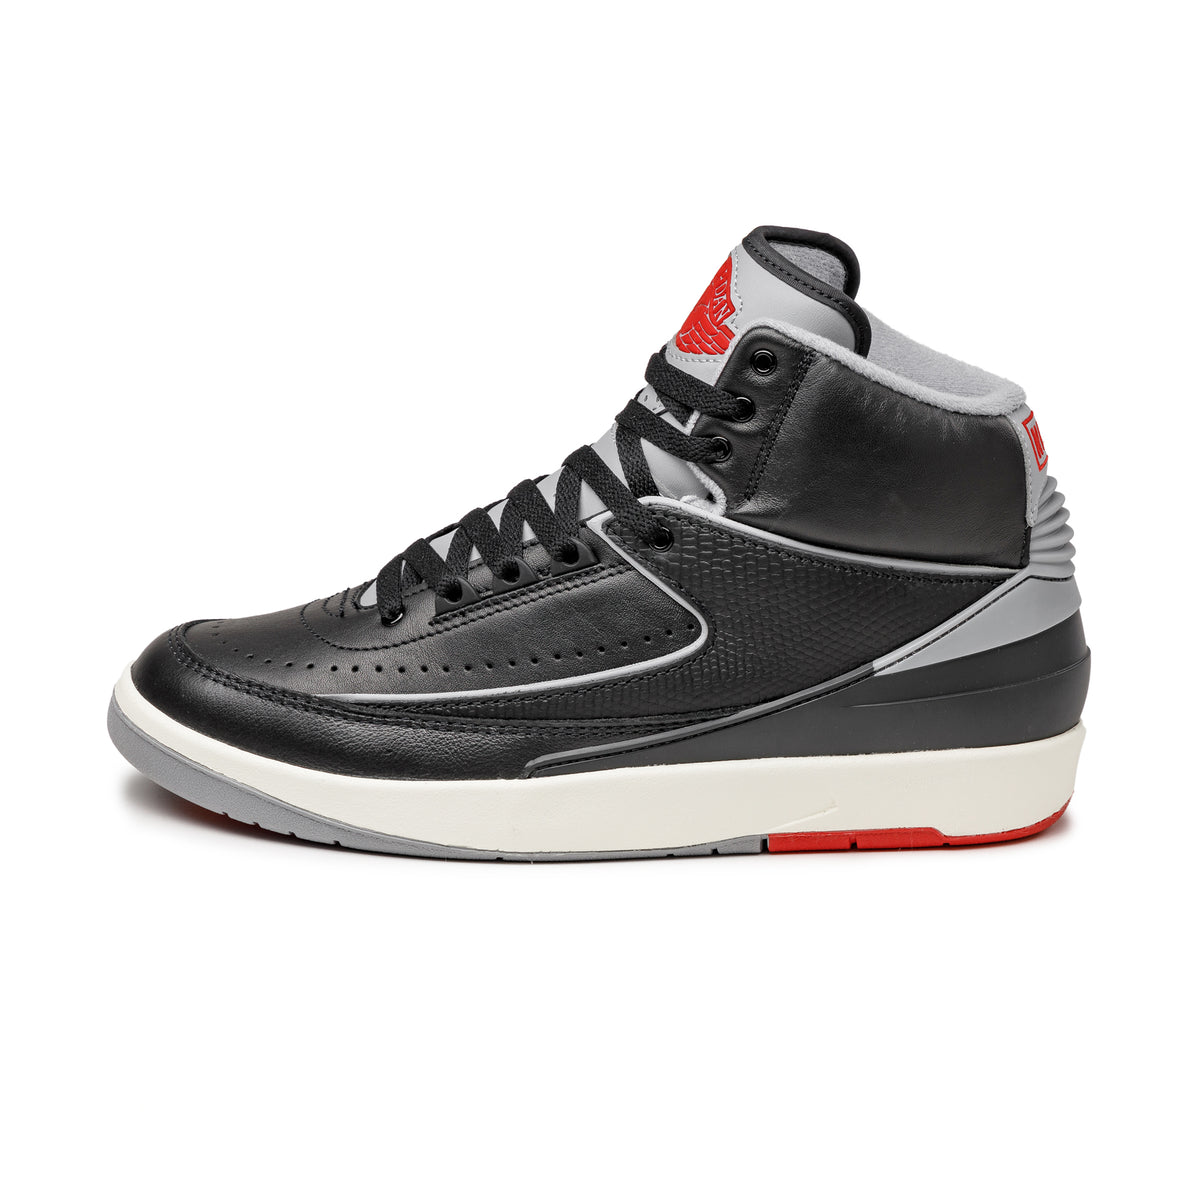 Nike Air Jordan 2 Retro *Black Cement* Black / Cement Grey / Fire Red / Sail